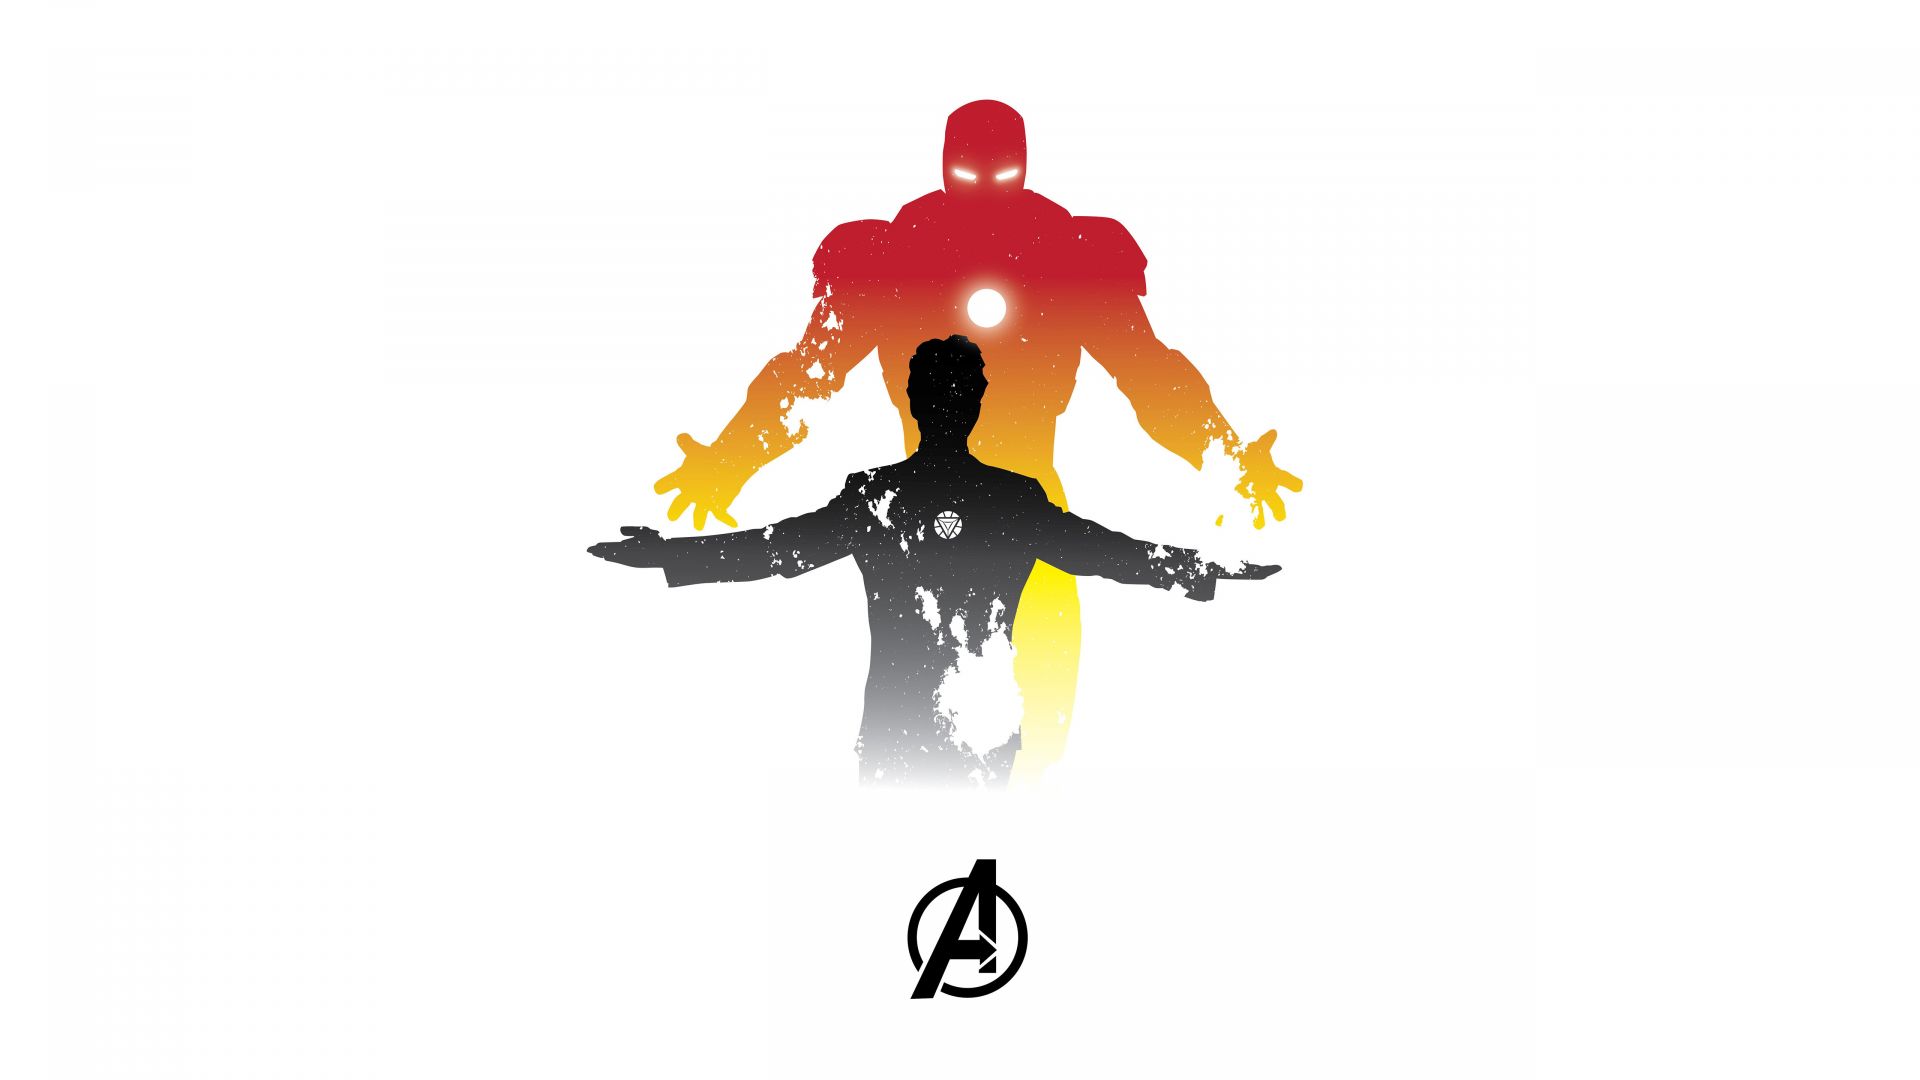 Iron man, marvel, artwork, minimal wallpaper, HD image, picture, background, 4e14ff